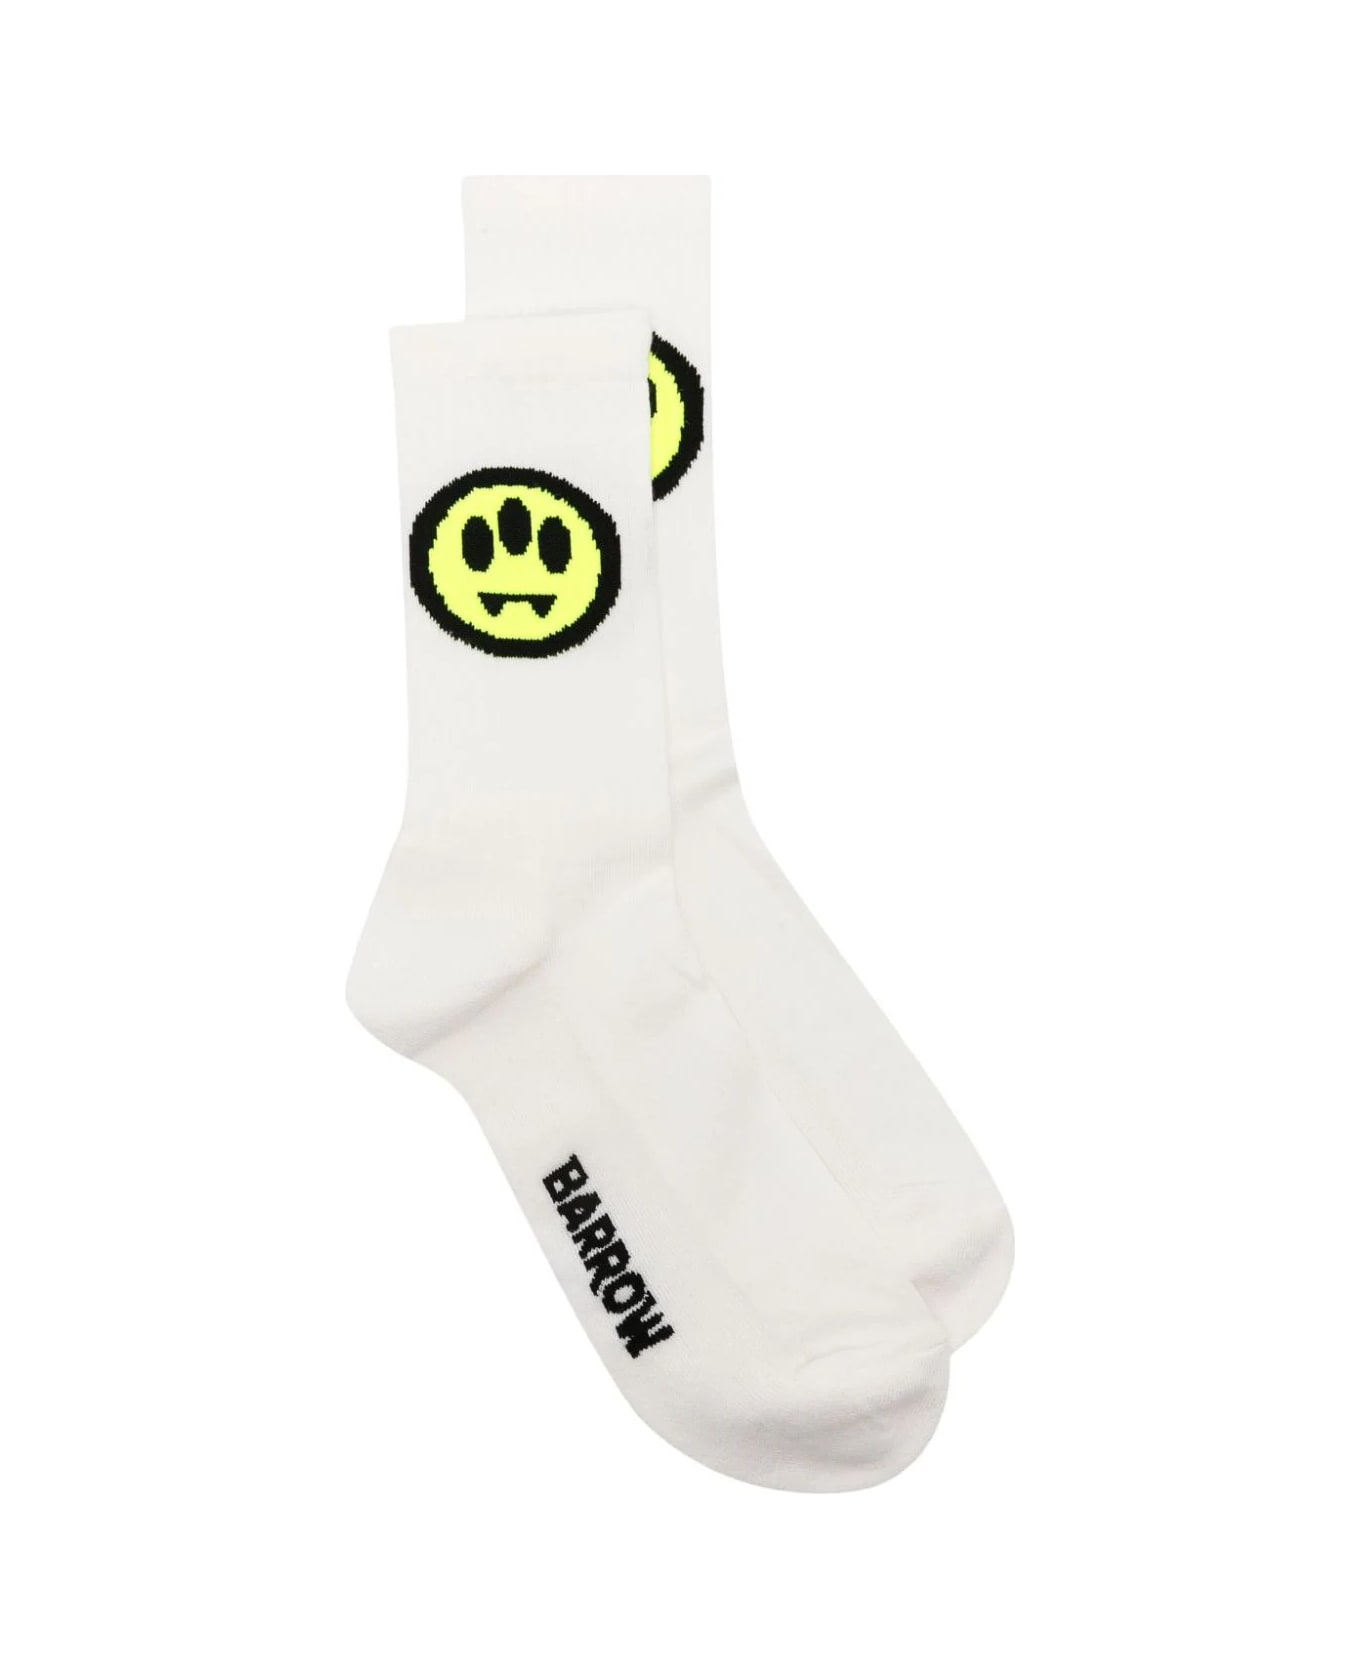 Barrow White Socks With Logo - White